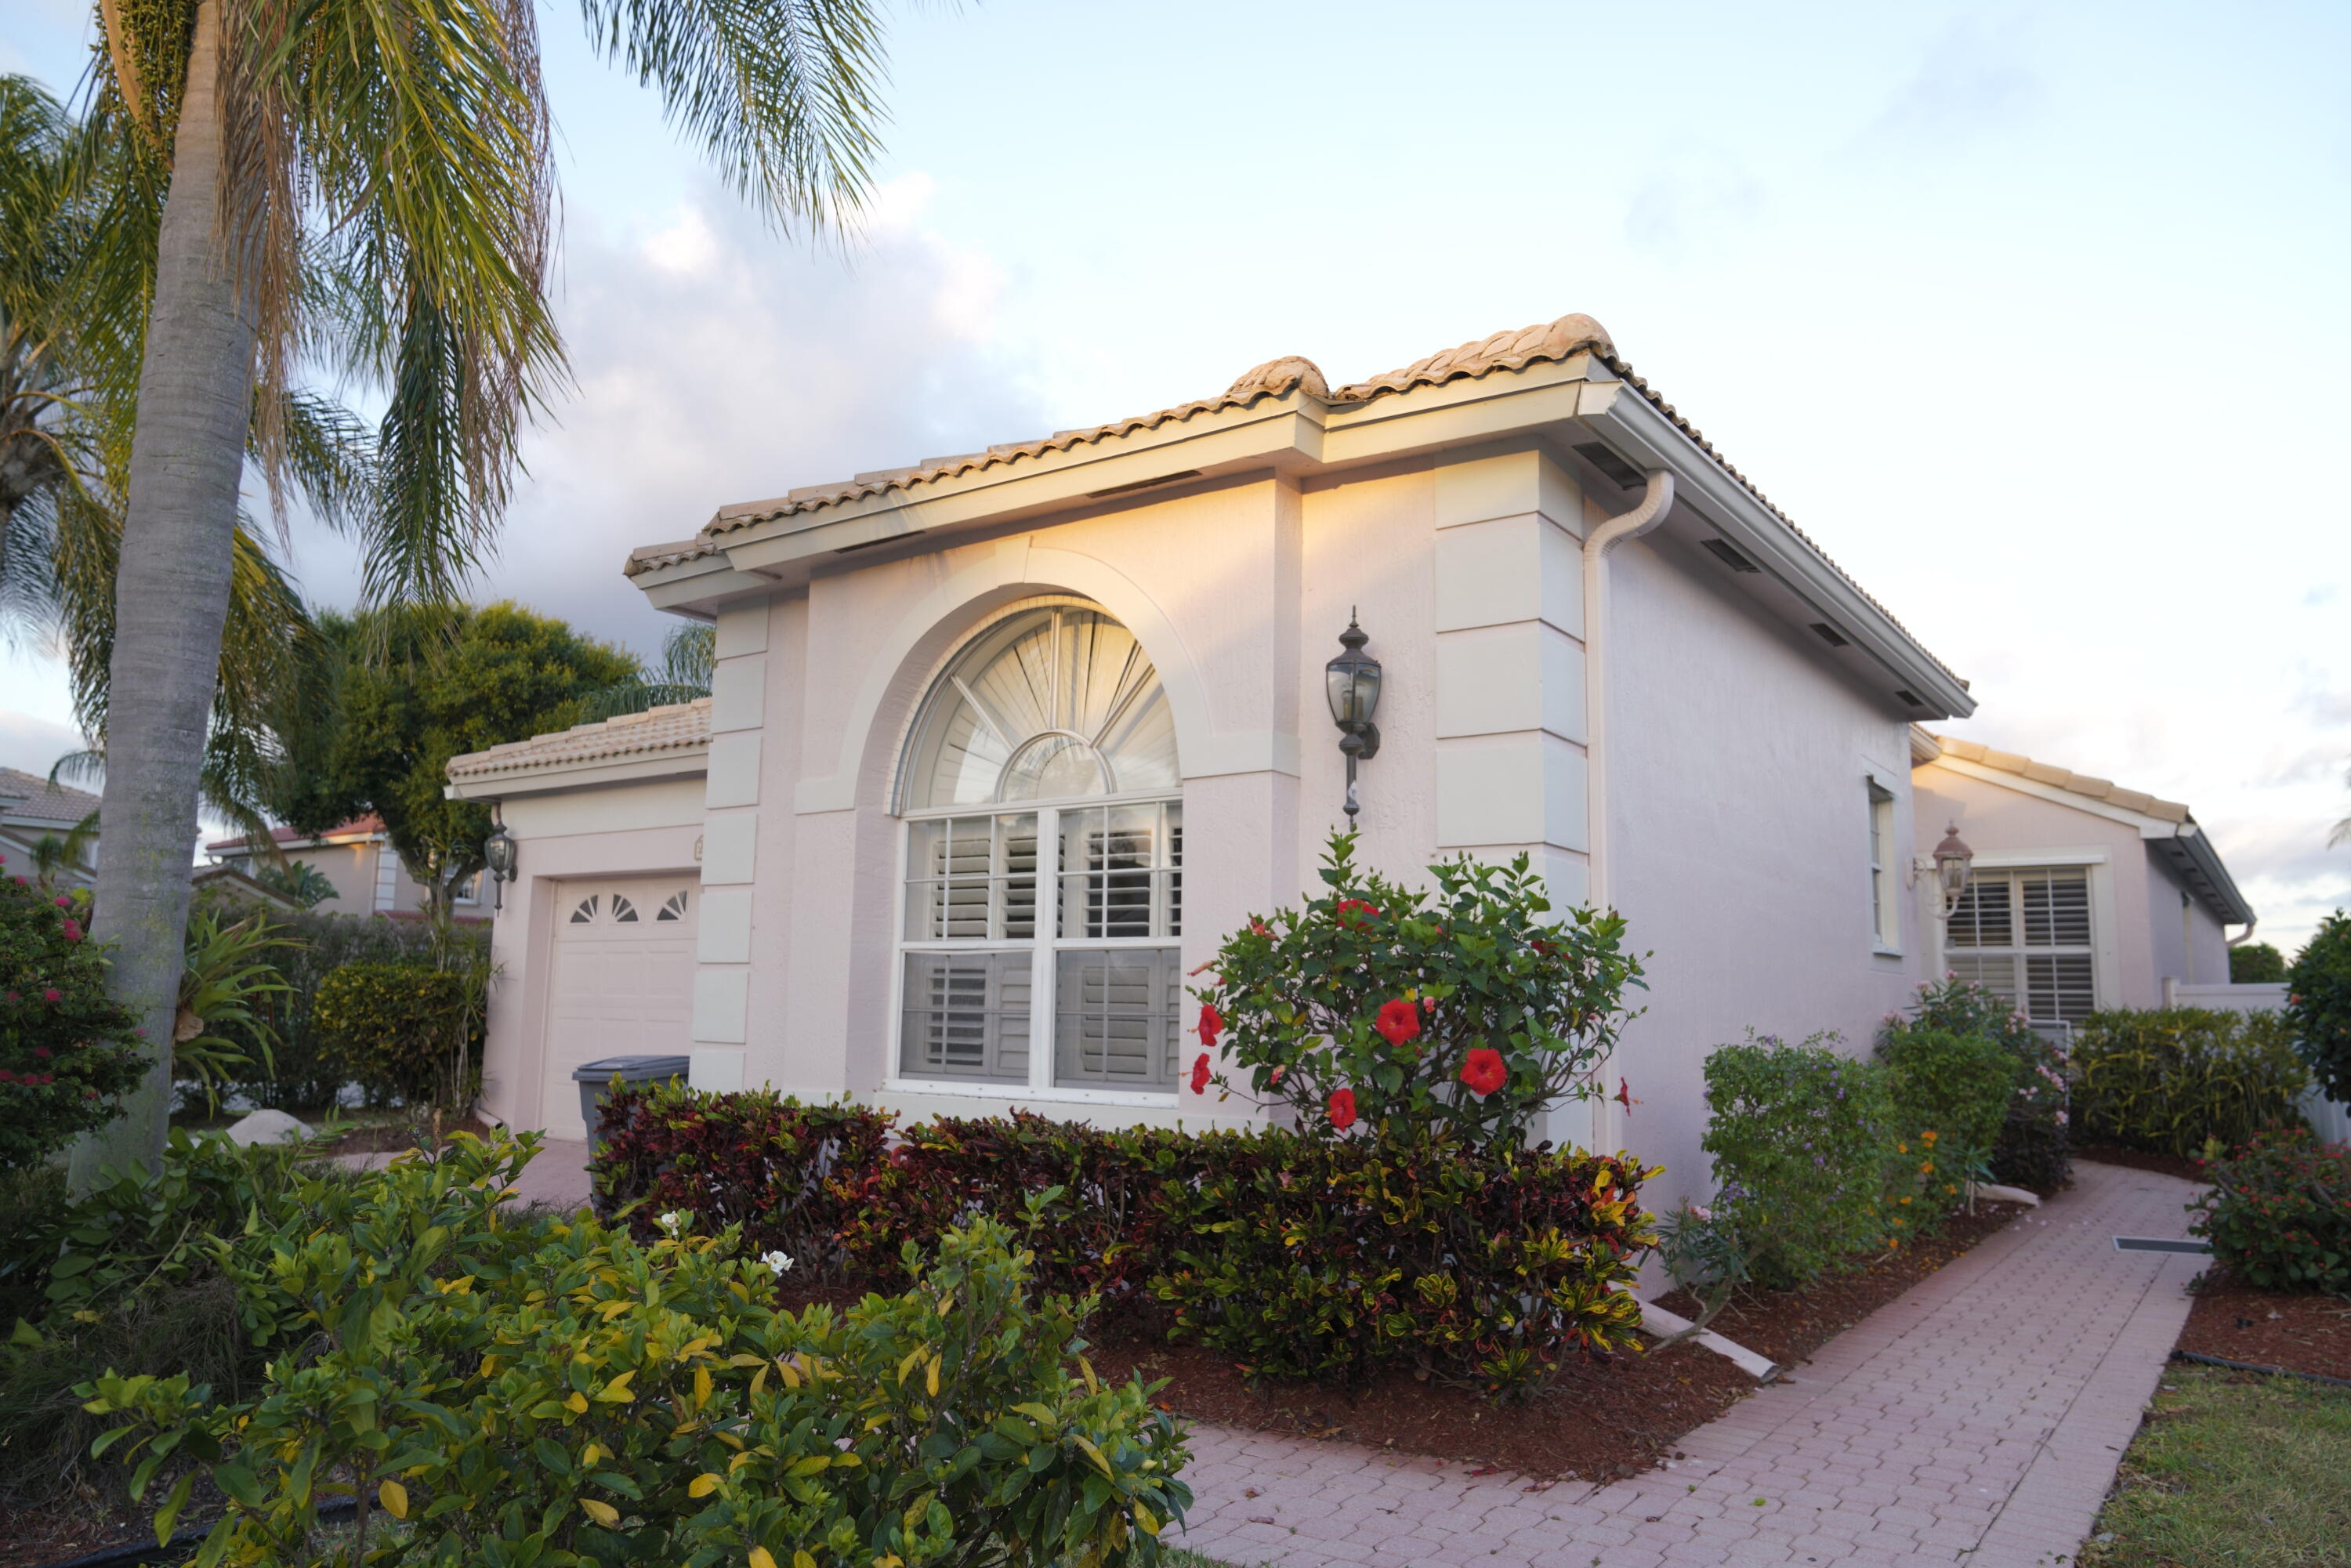 Property for Sale at 23445 Alzira Circle, Boca Raton, Palm Beach County, Florida - Bedrooms: 3 
Bathrooms: 2  - $899,000